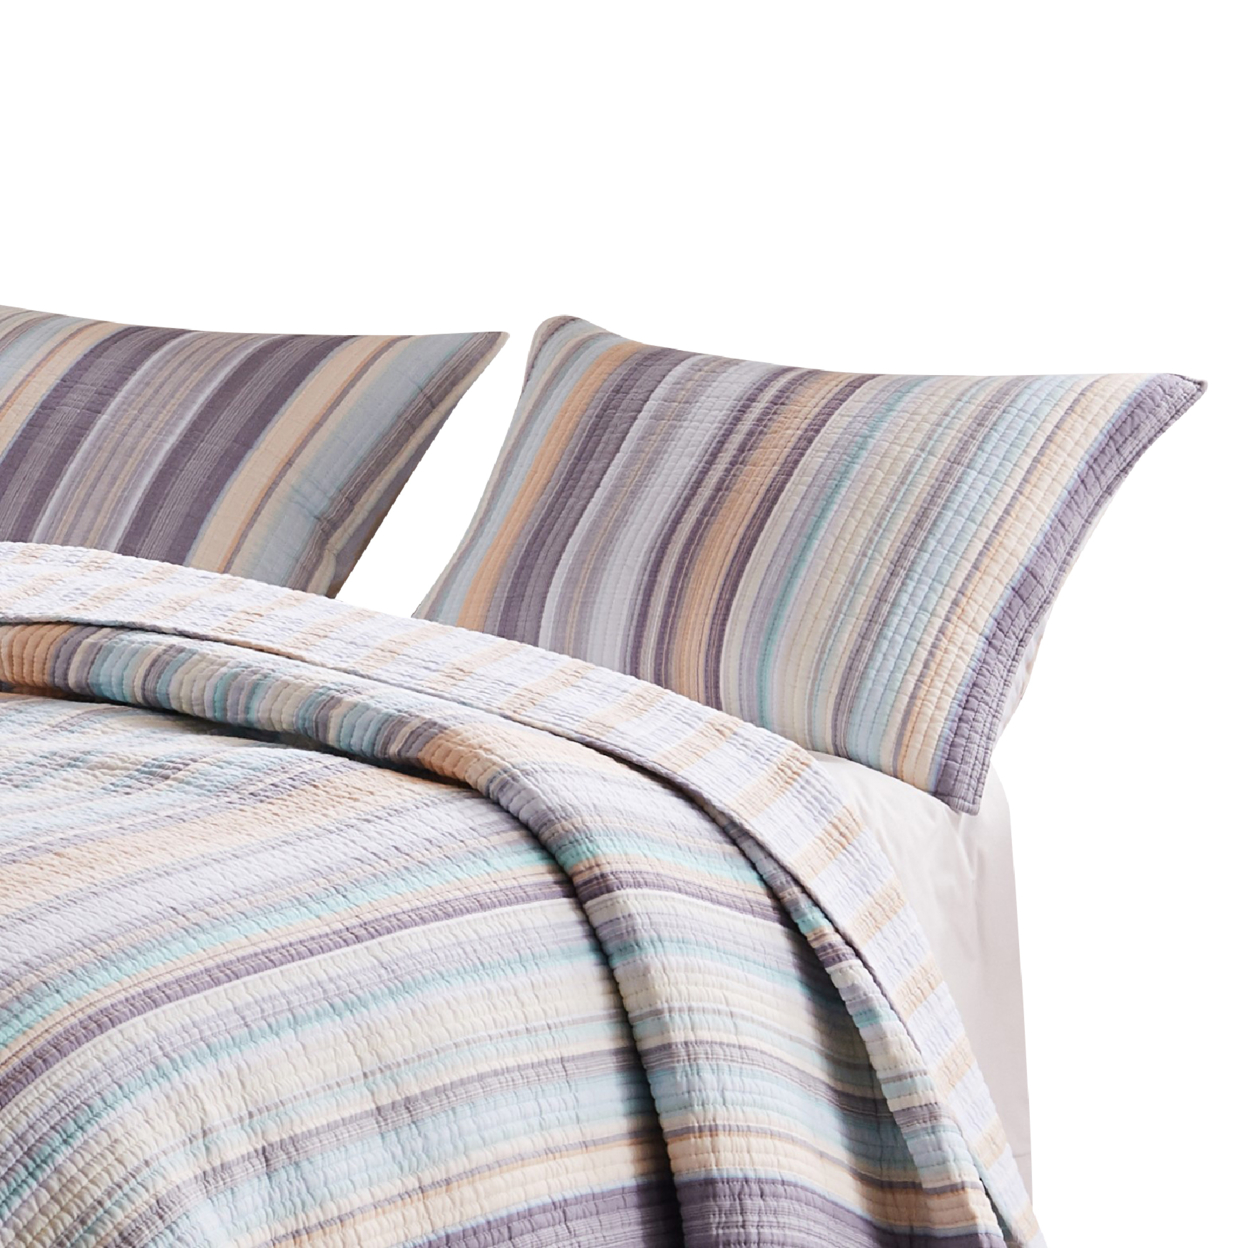 Ysa 36 Inch Quilted King Pillow Sham, Cotton, Reversible Striped Design- Saltoro Sherpi